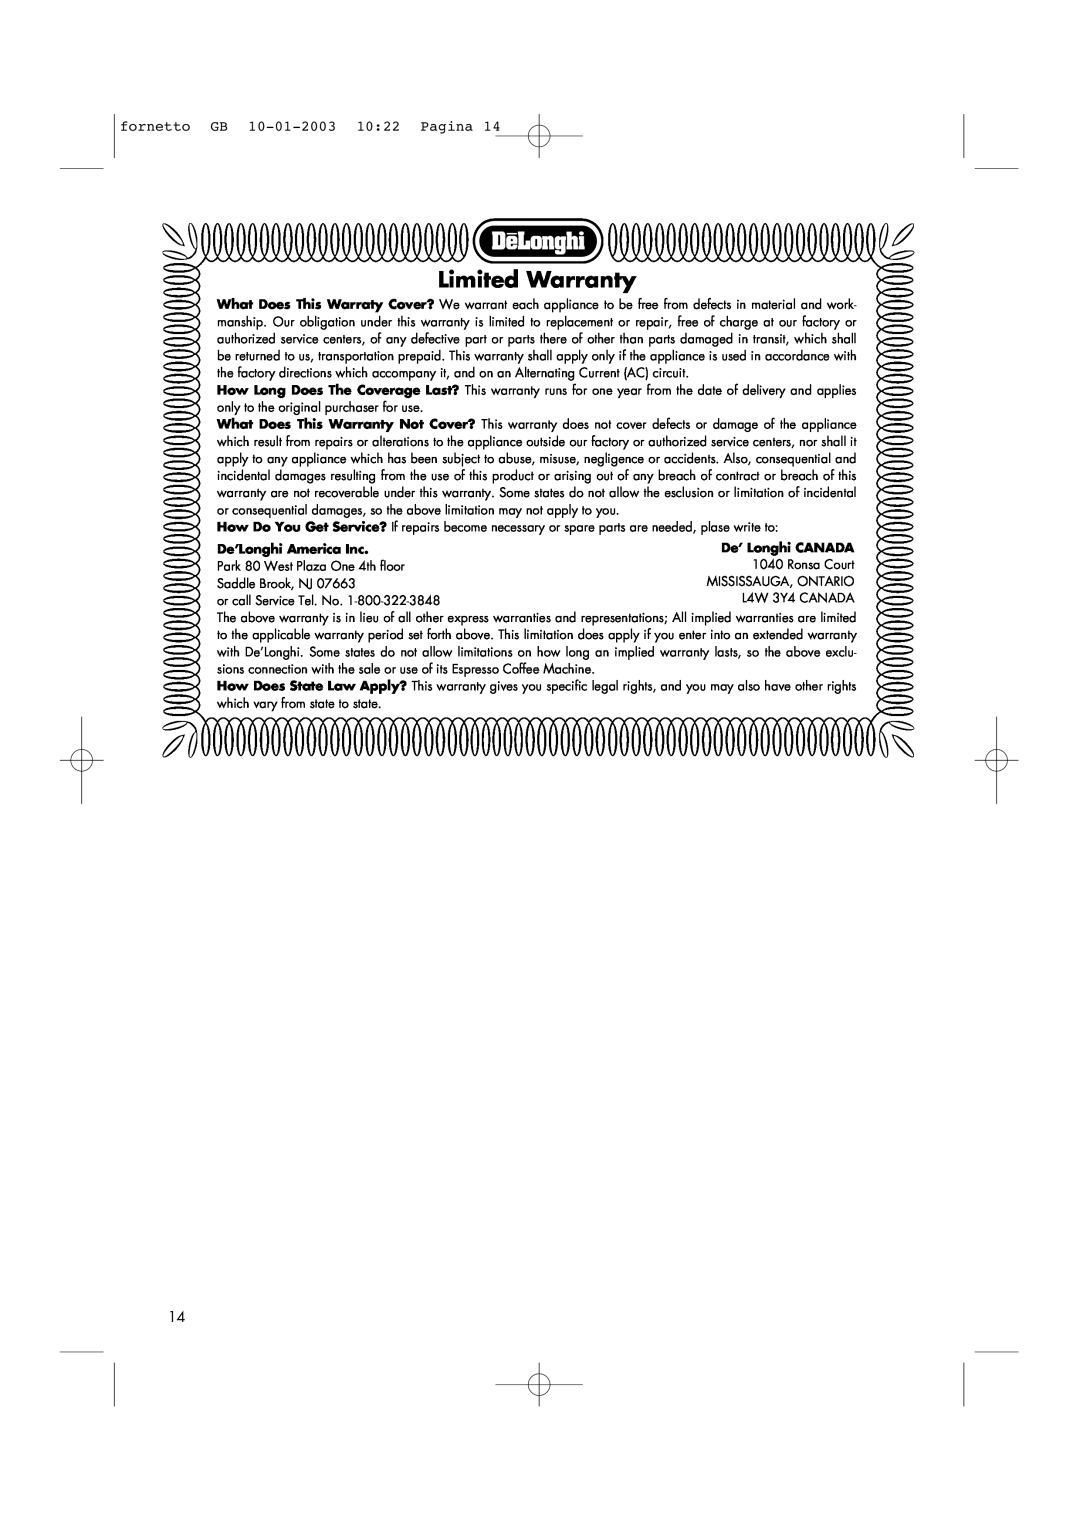 DeLonghi AR690 manual Limited Warranty, fornetto GB 10-01-200310 22 Pagina, De’Longhi America Inc 